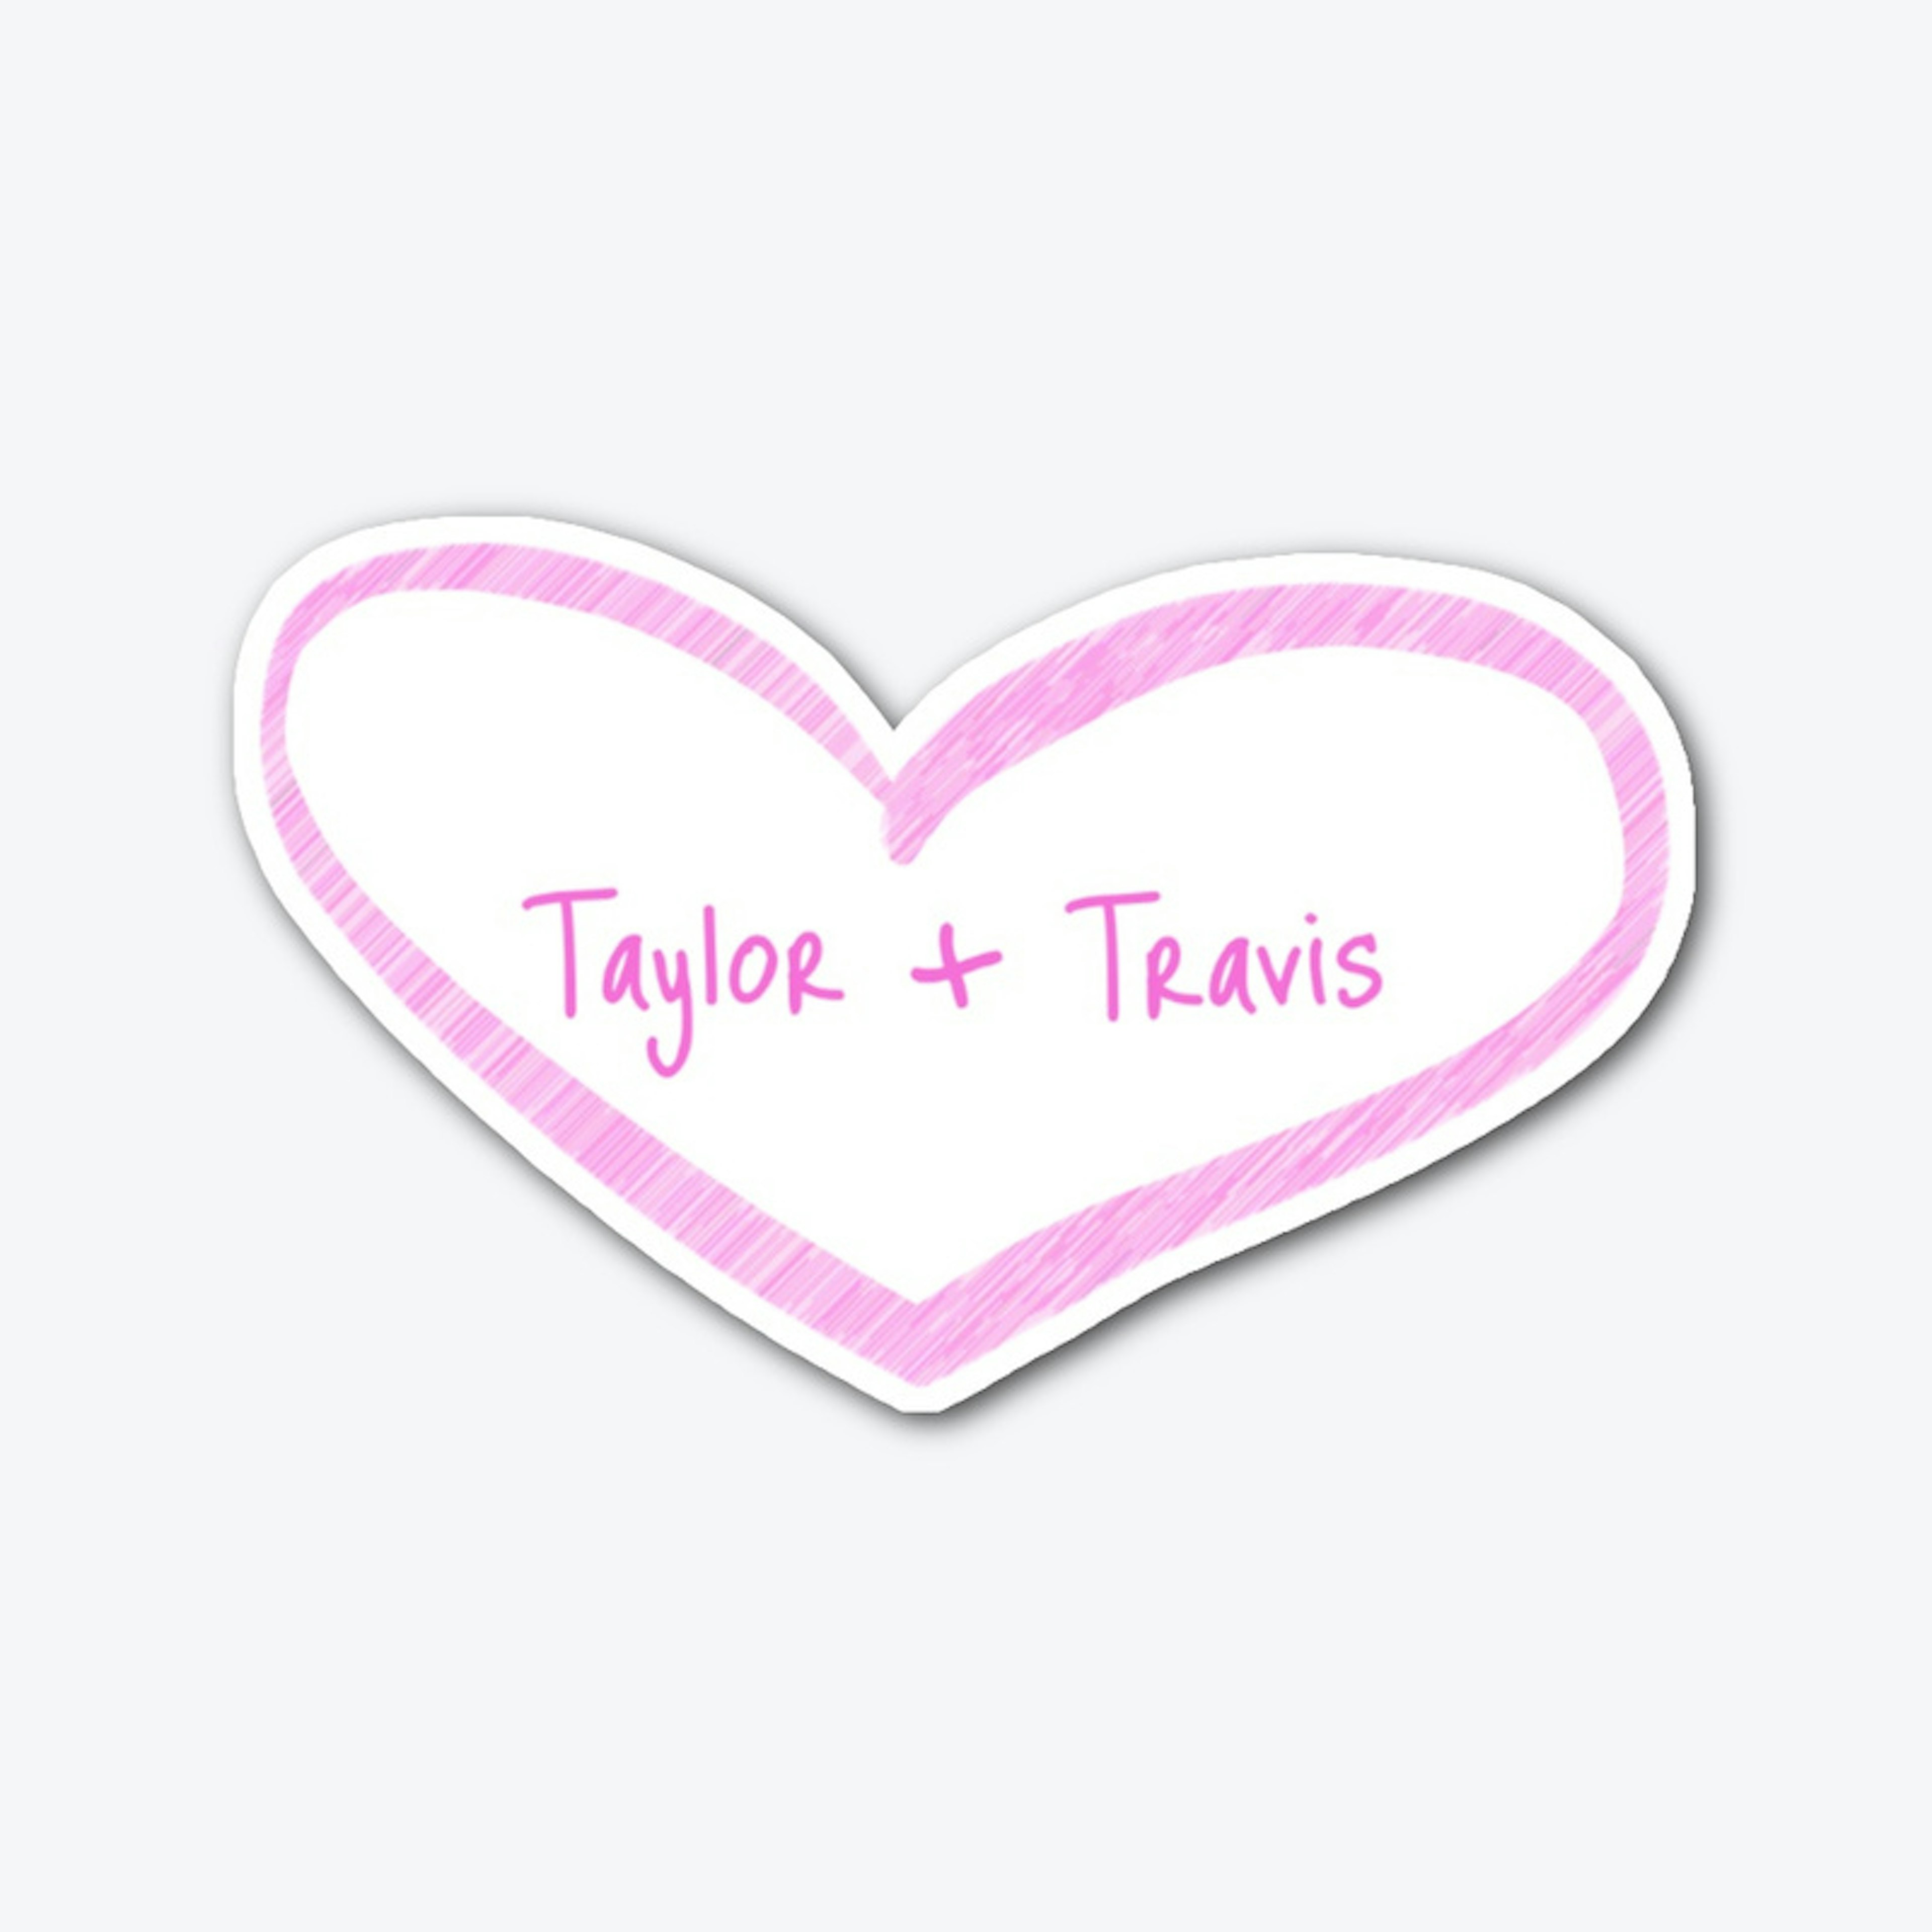 Taylor + Travis